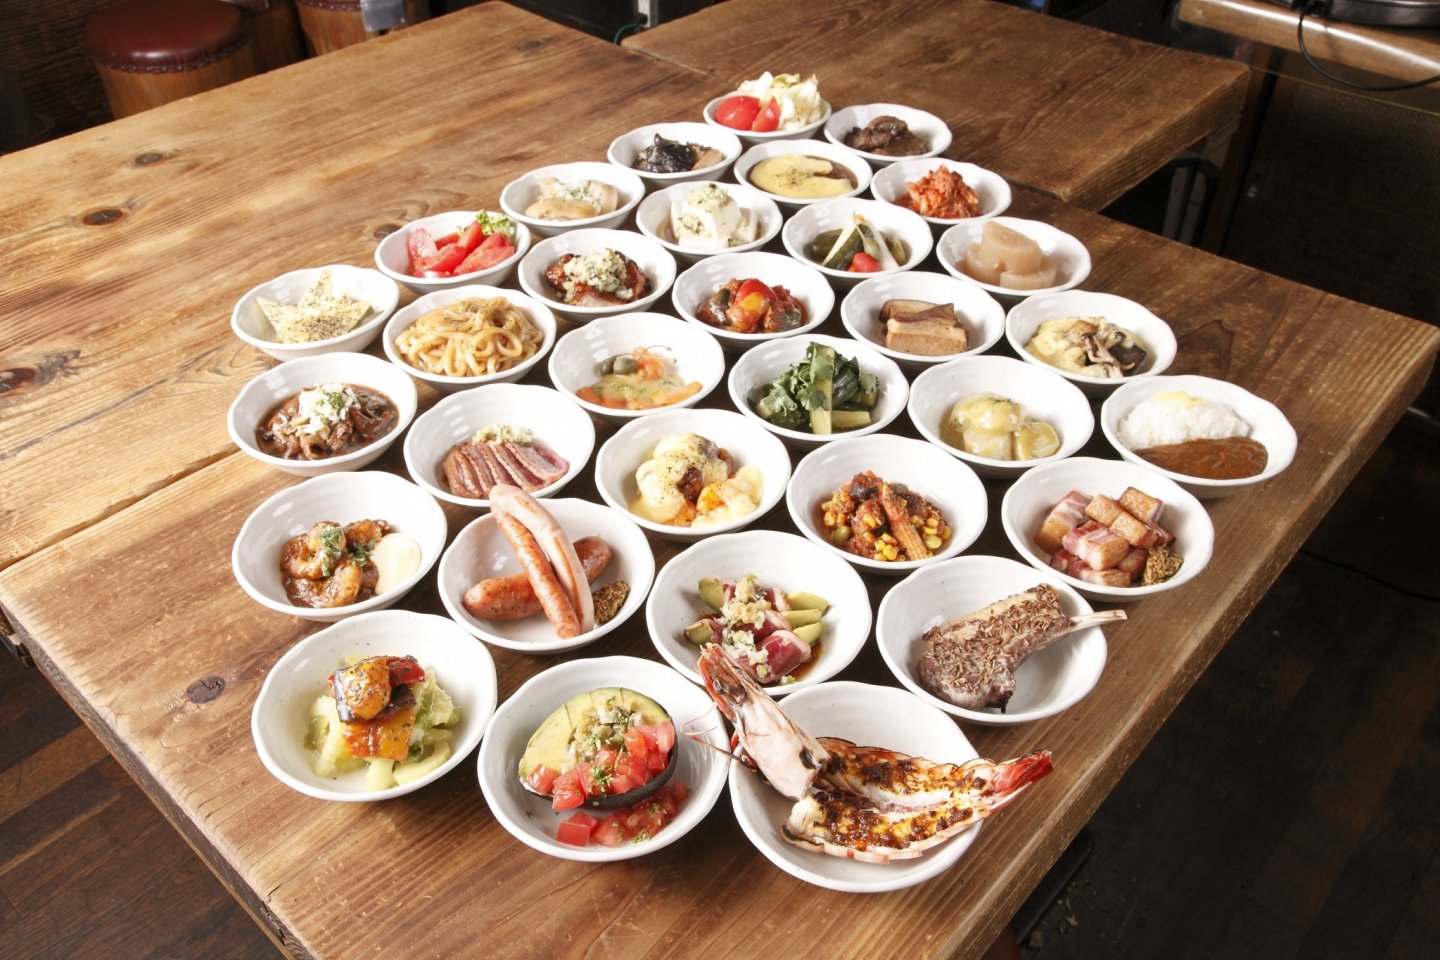 Spice tapas selection – izakaya style dishes for ¥500 each